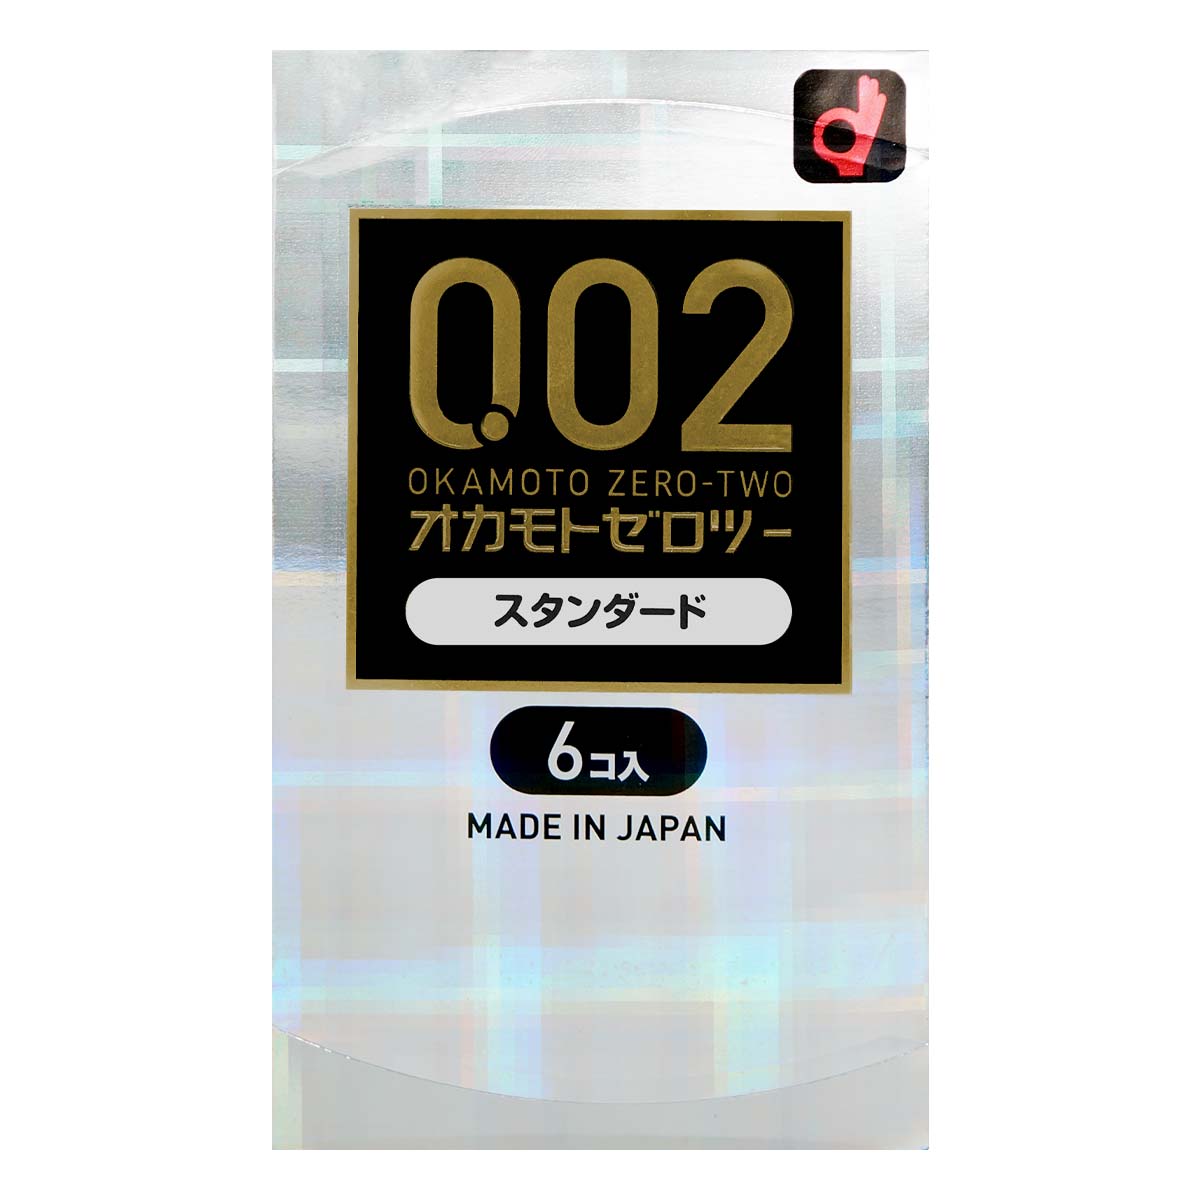 Okamoto Unified Thinness 0.02EX (Japan Edition) 6's Pack PU Condom-p_2